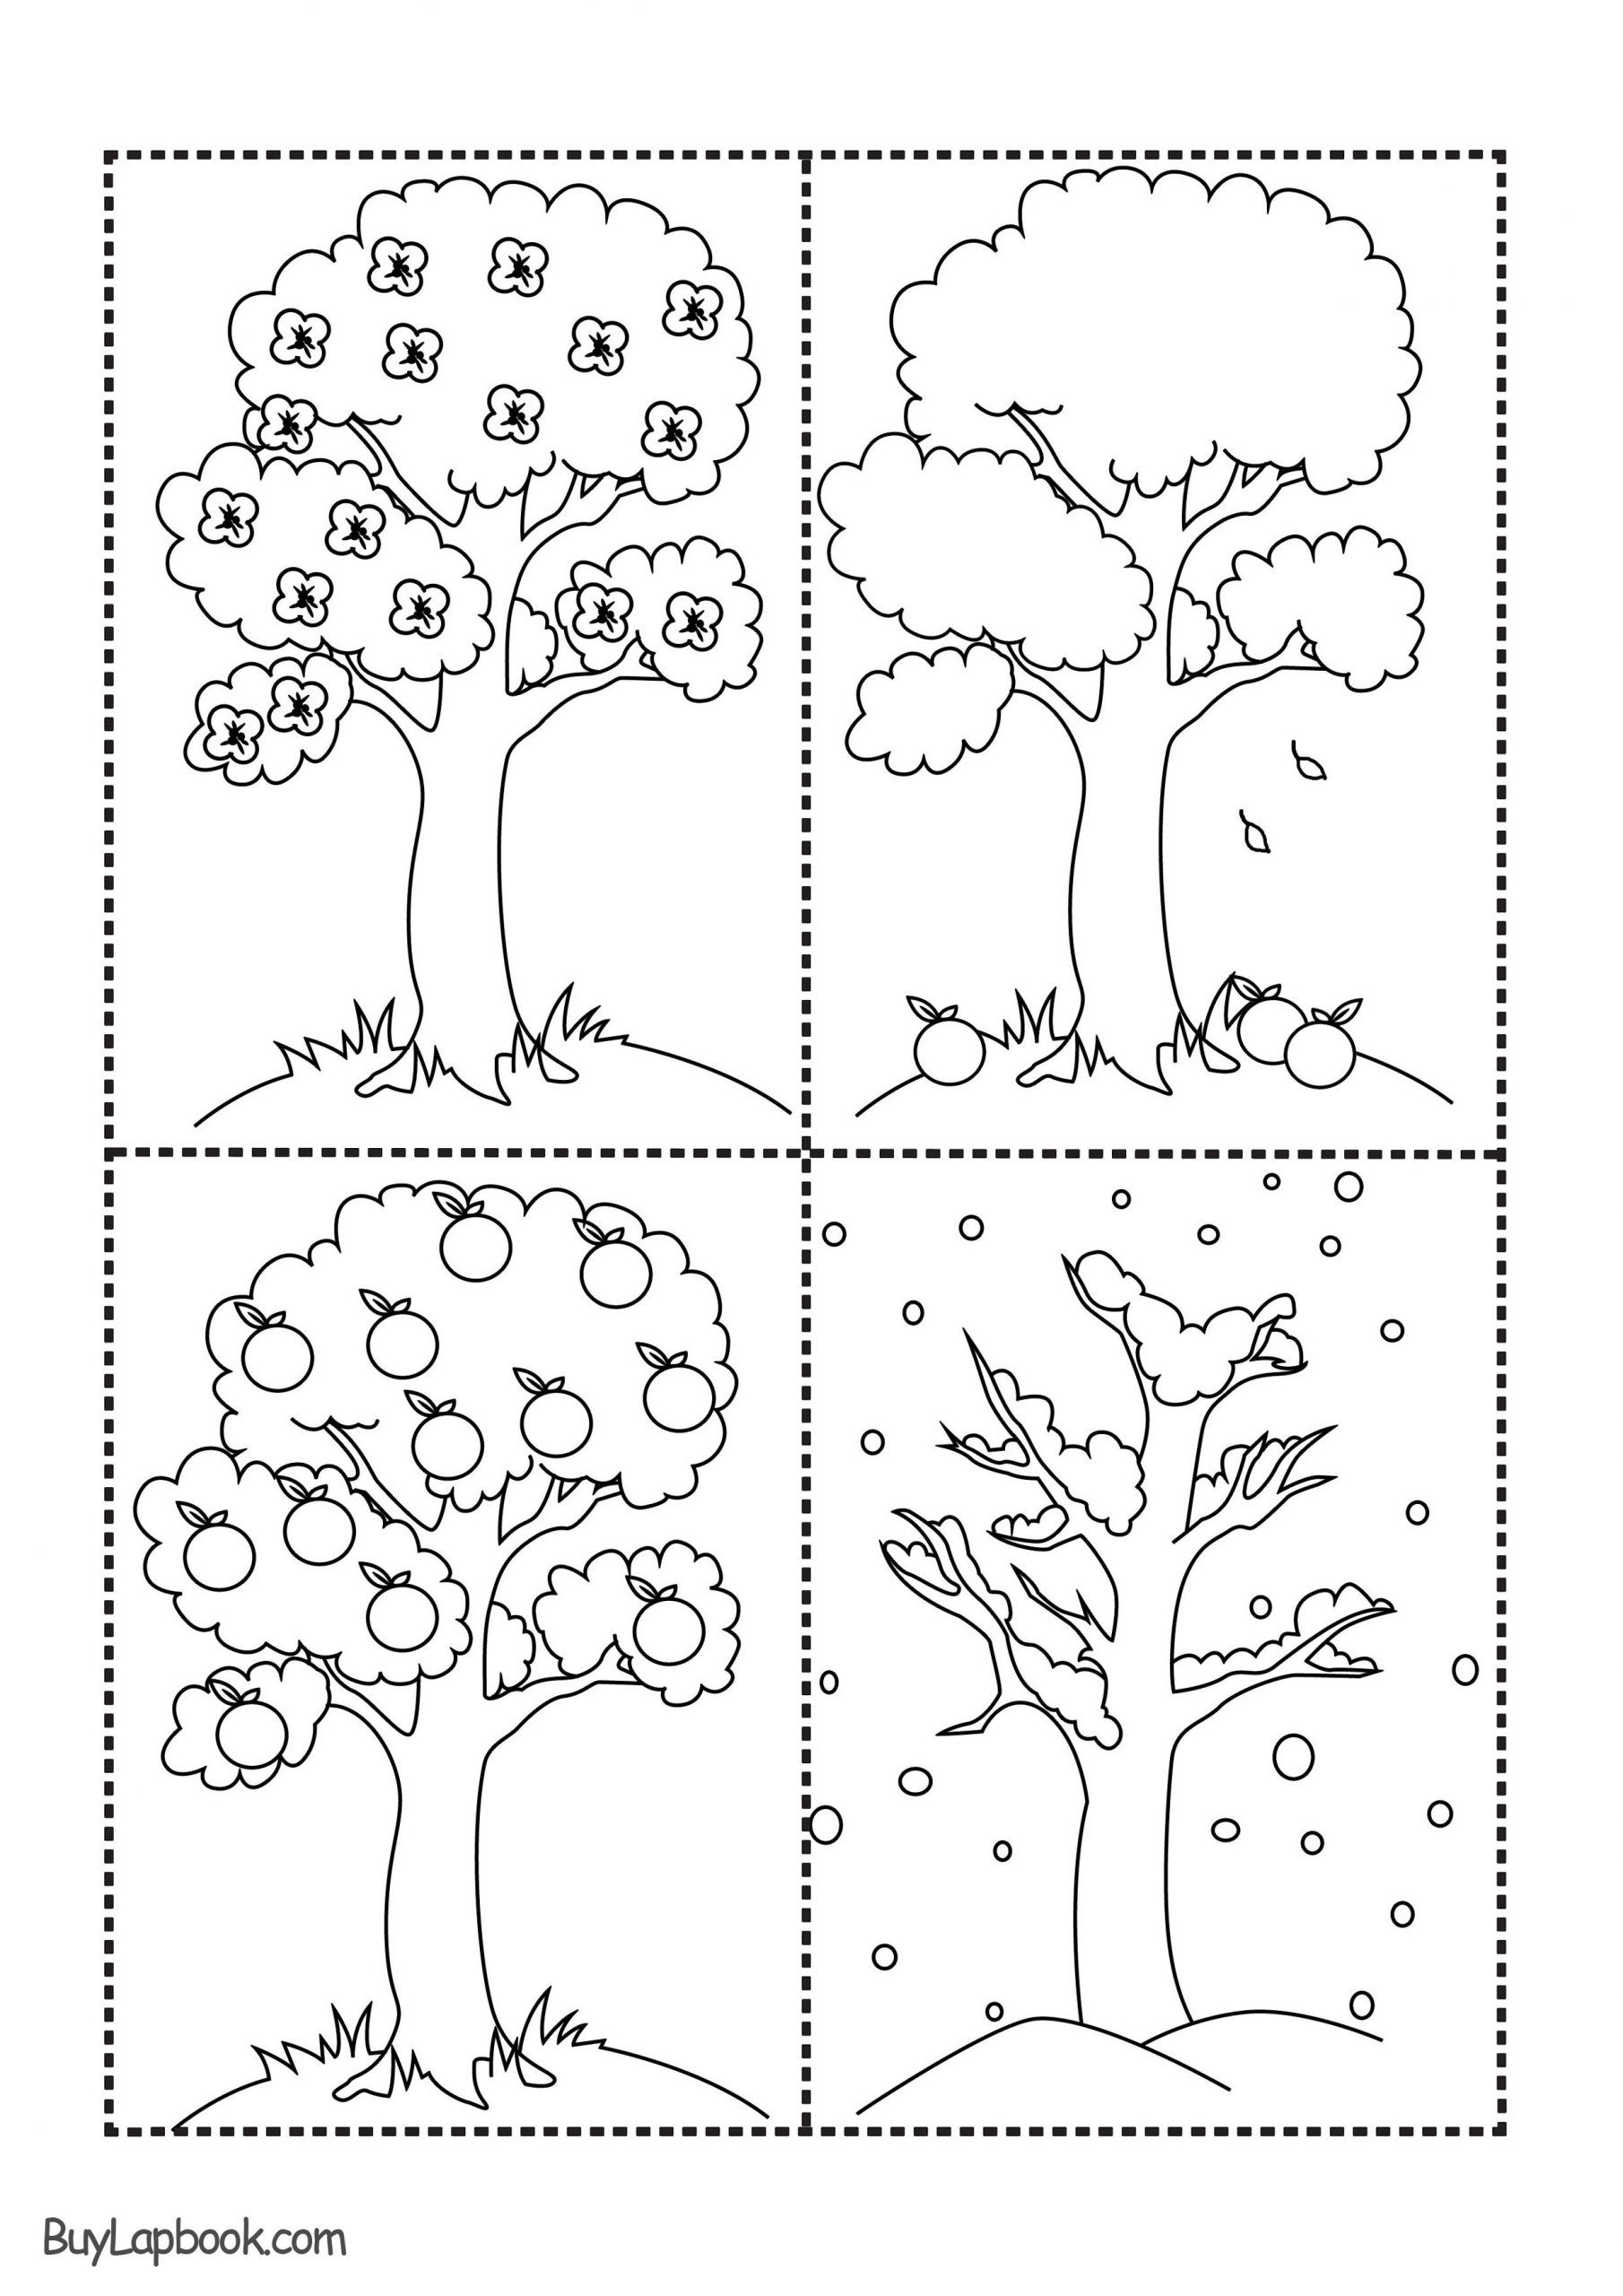 Tree Worksheets For Kindergarten Worksheet For Kindergarten In 2020